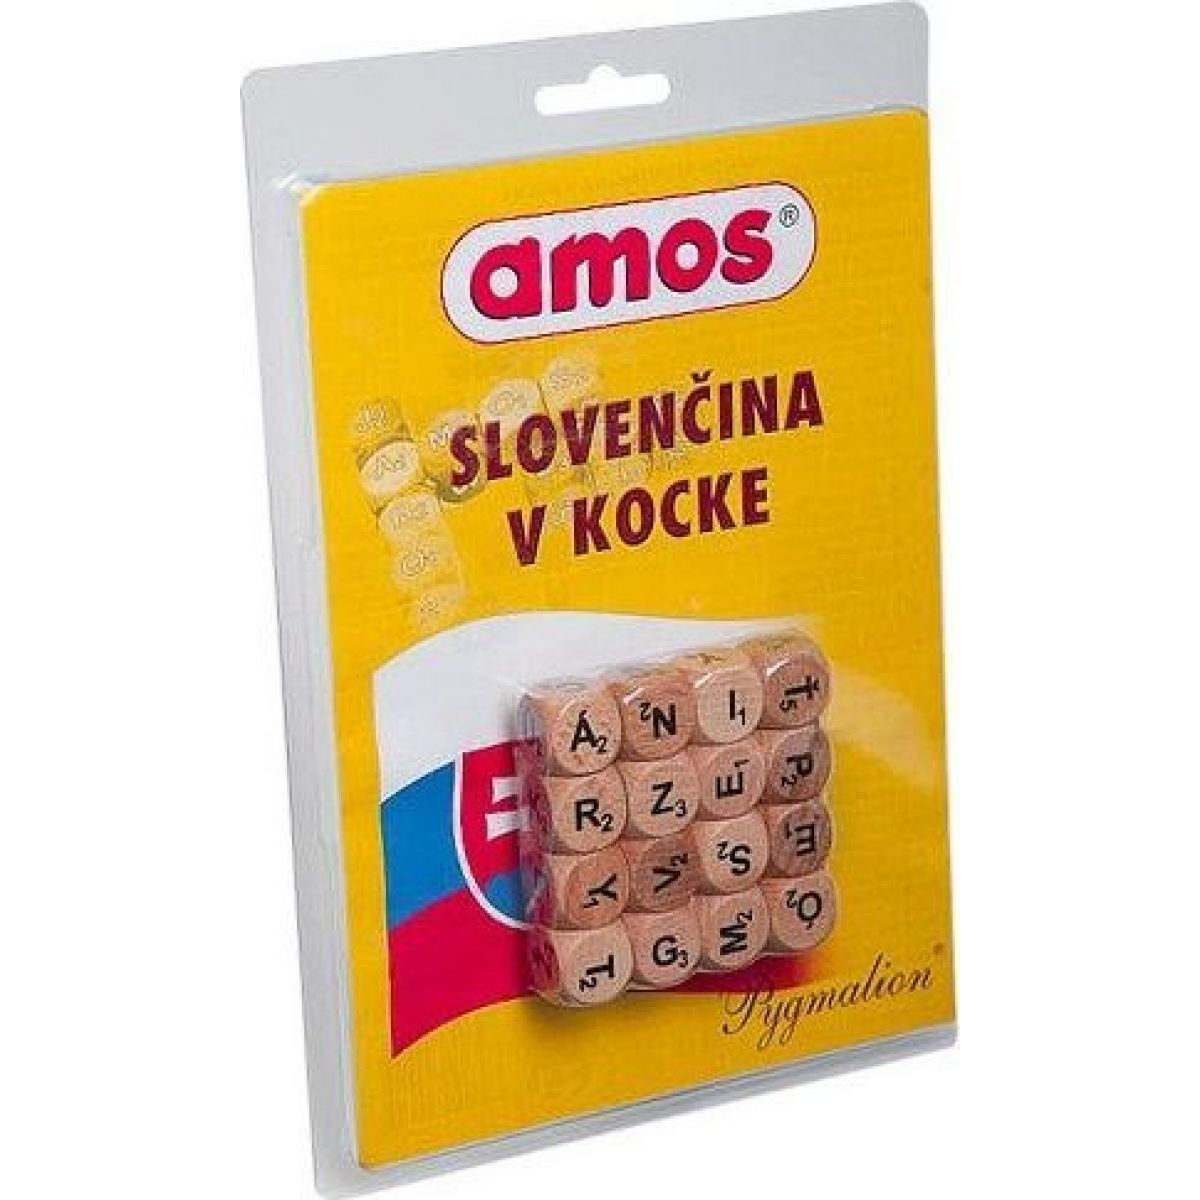 Amos Slovenčina v kocke